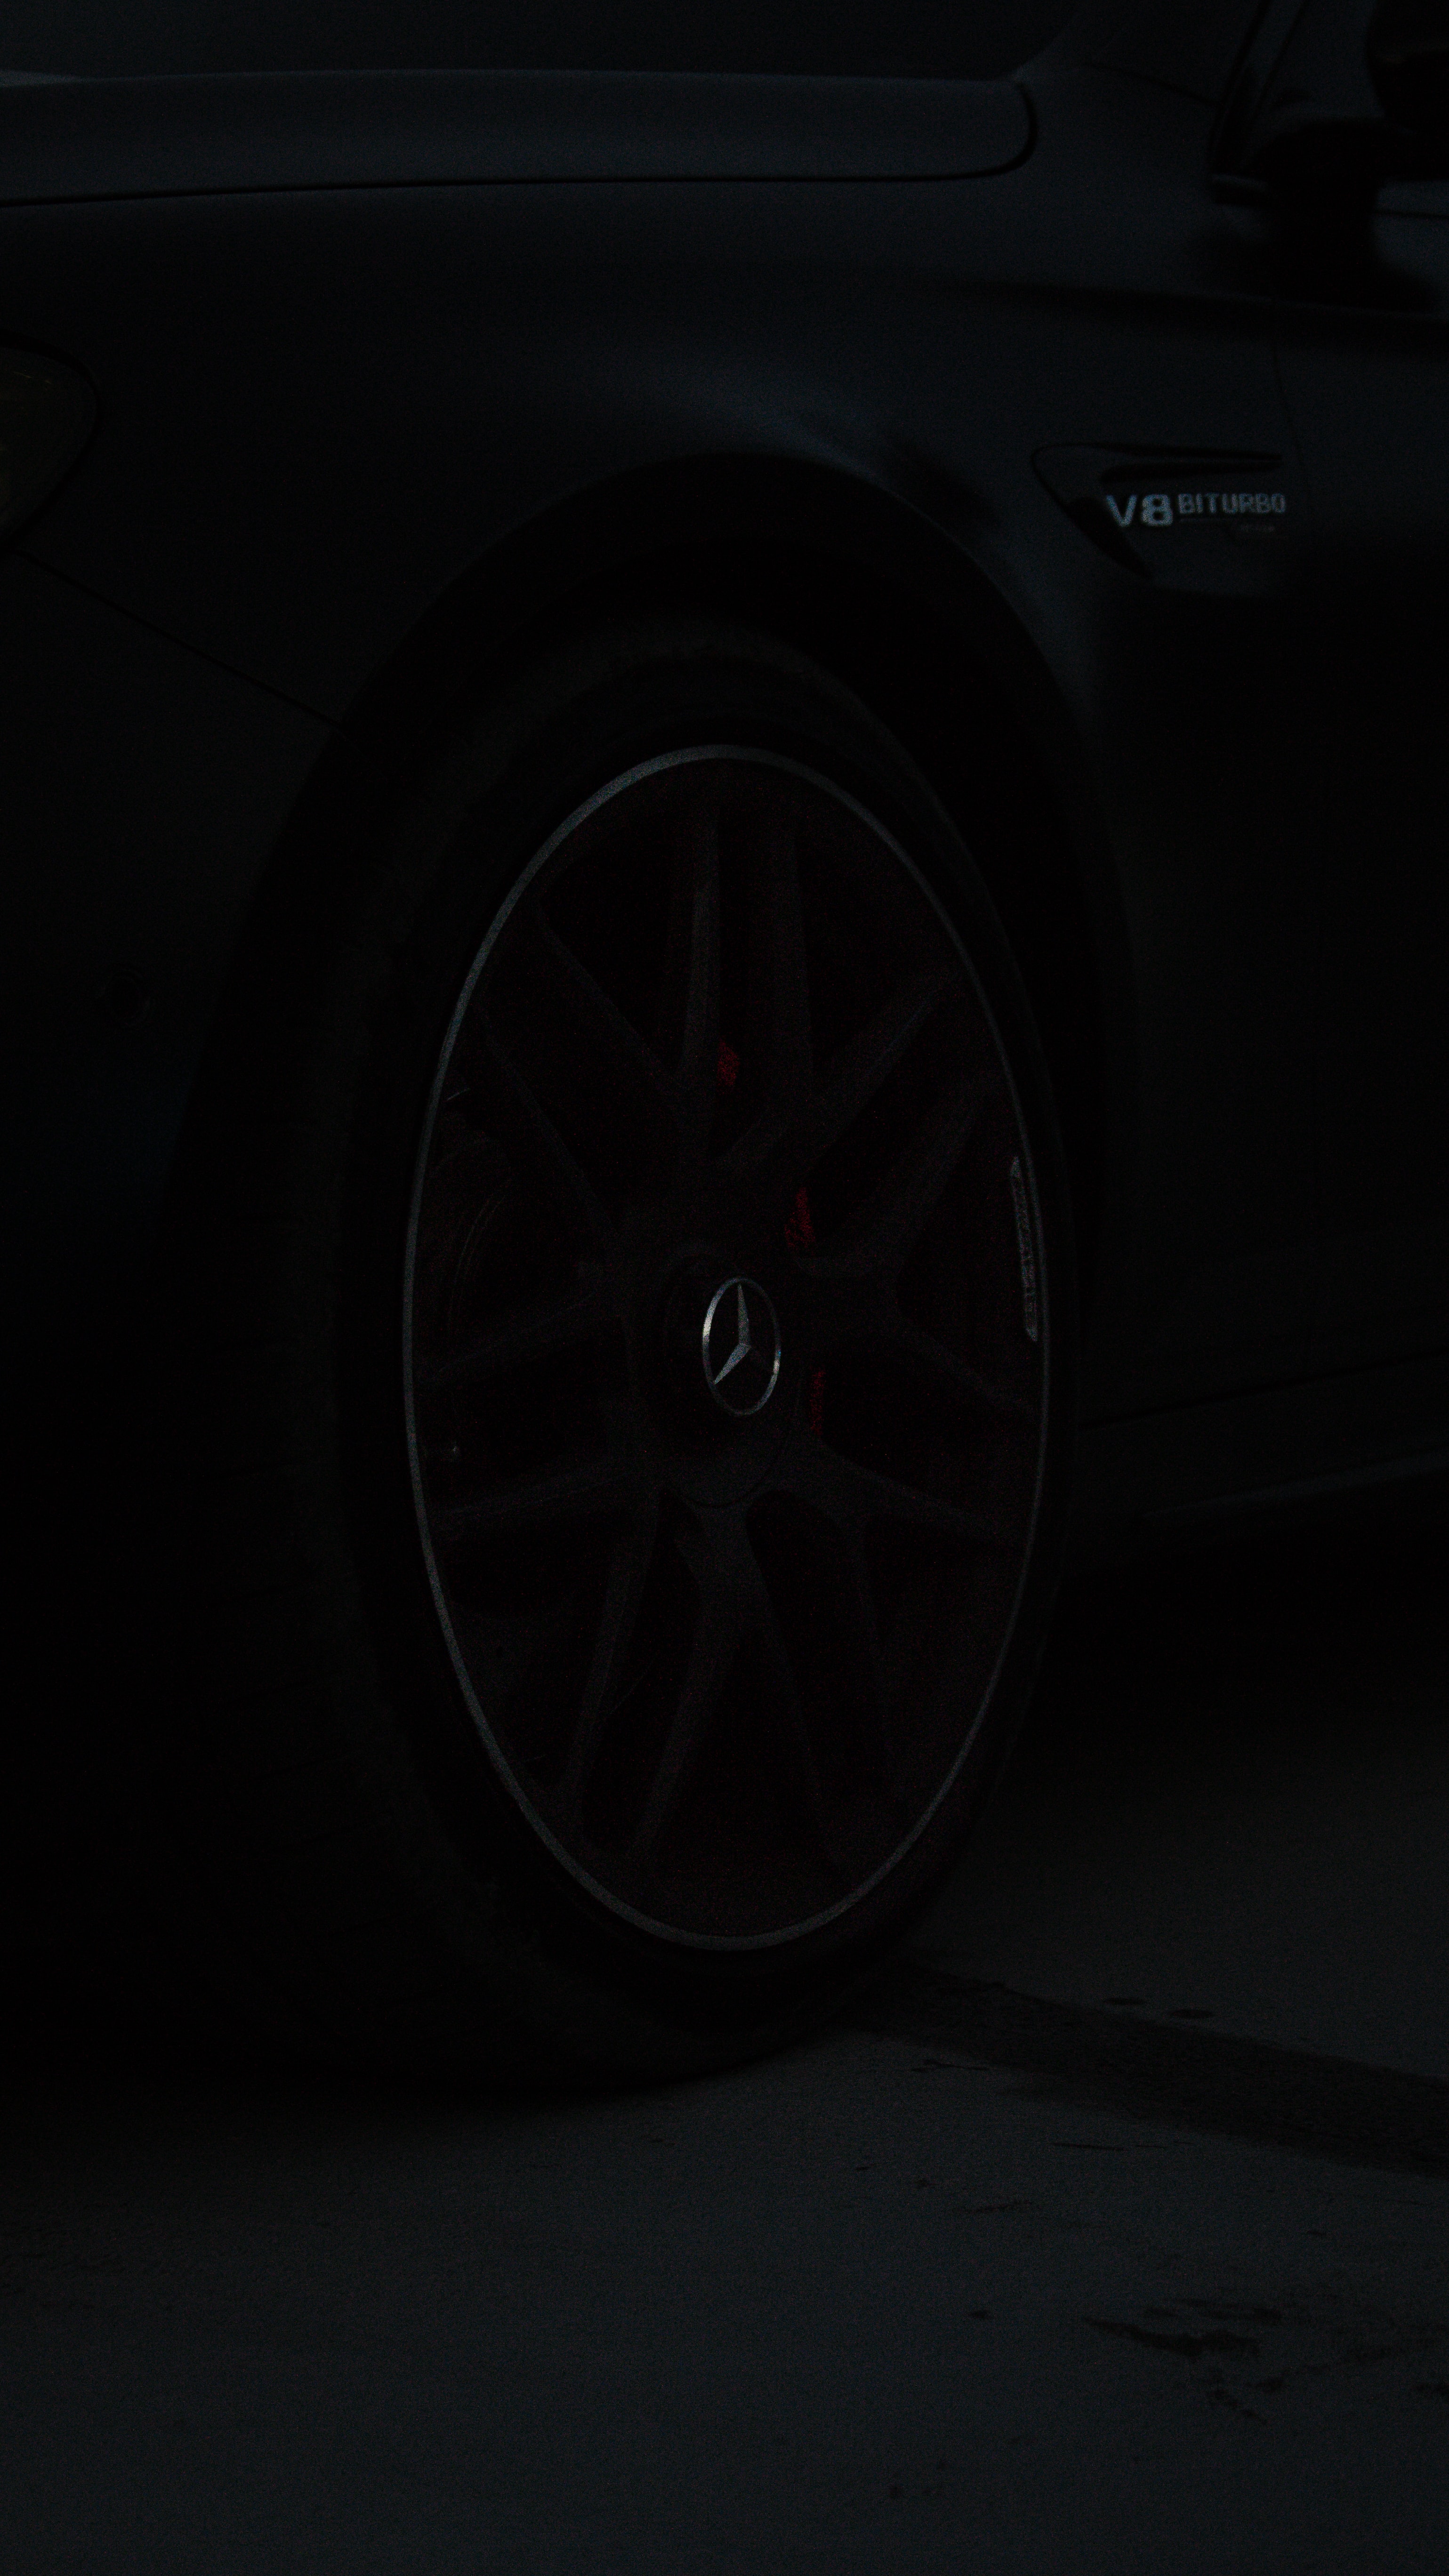 mercedes benz, black, dark, nature, car, wheel 1080p